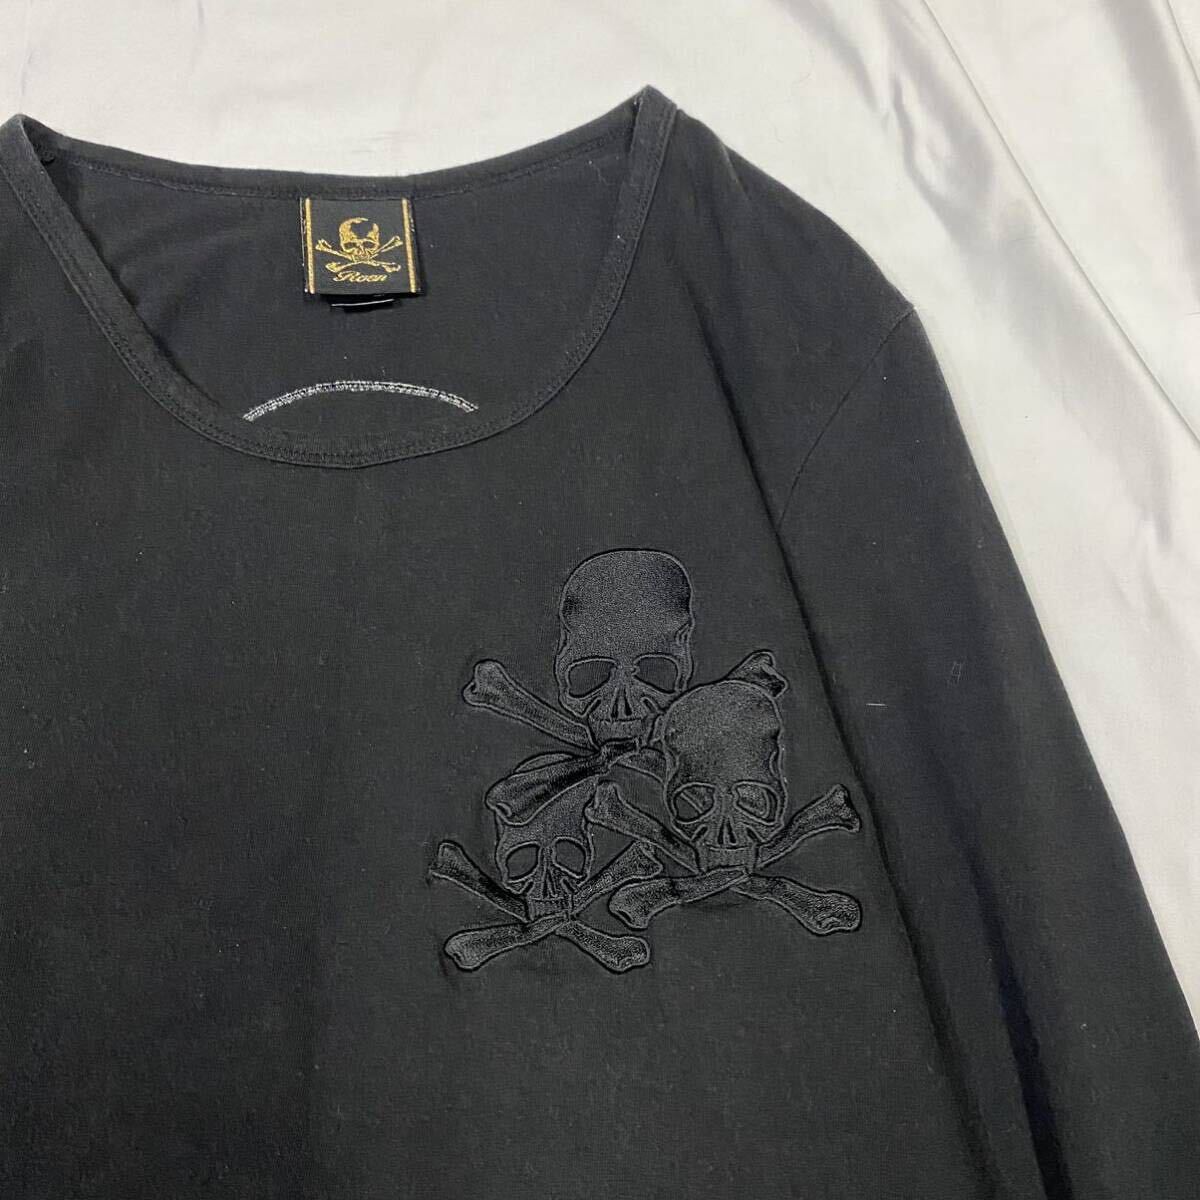 Rare 00's Roen Leopard Skull T-shirt JAPANESE LABEL archive goa ifsixwasnine kmrii share spirit lgb 14th addiction_画像5